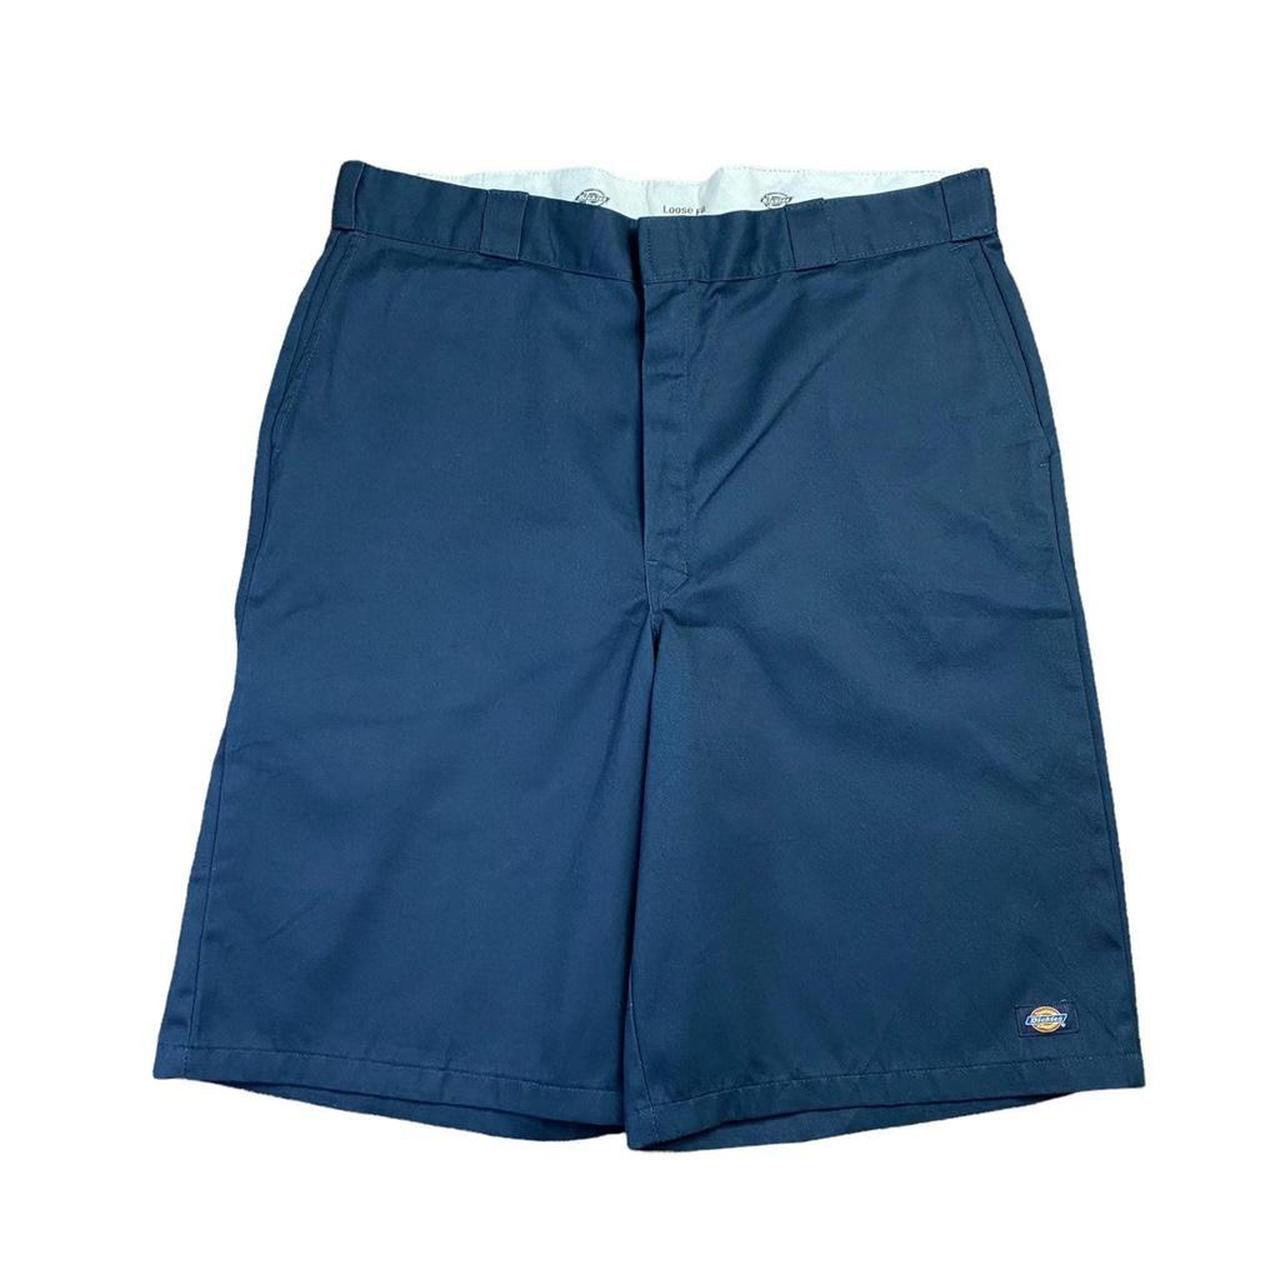 Dickies Men's Navy and Blue Shorts | Depop